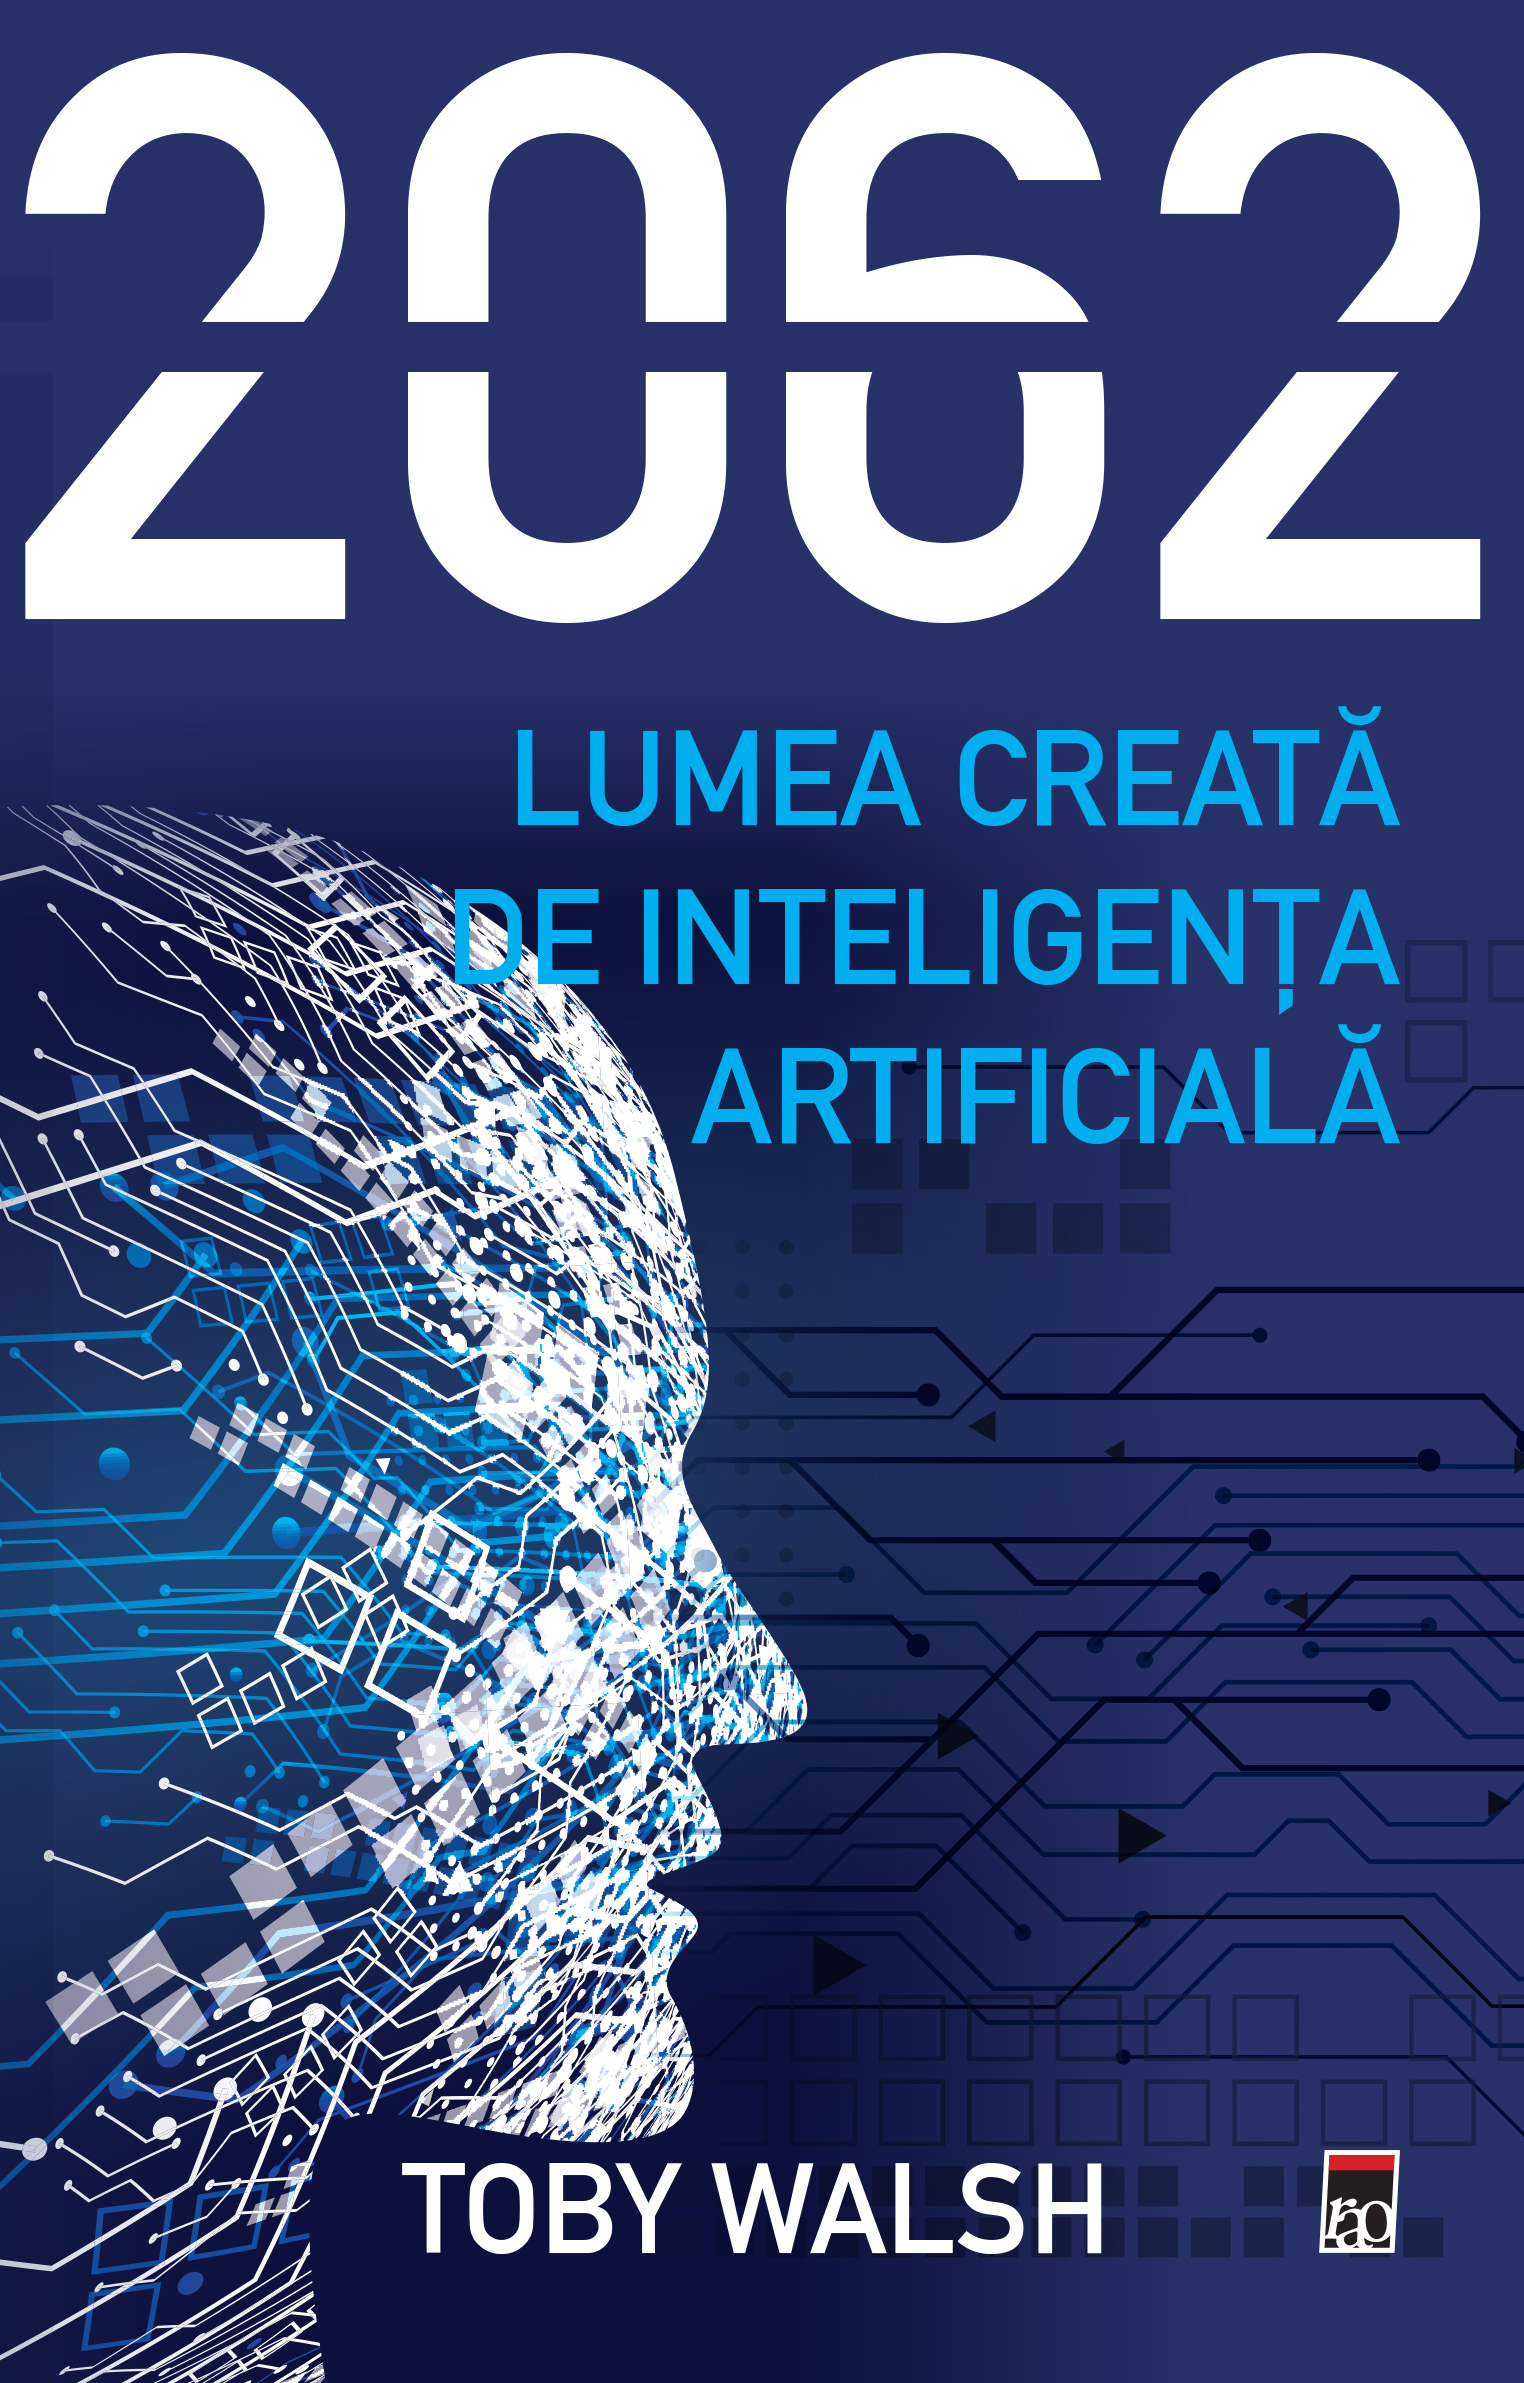 2062. Lumea creata de inteligenta artificiala | Toby Walsh 2062.